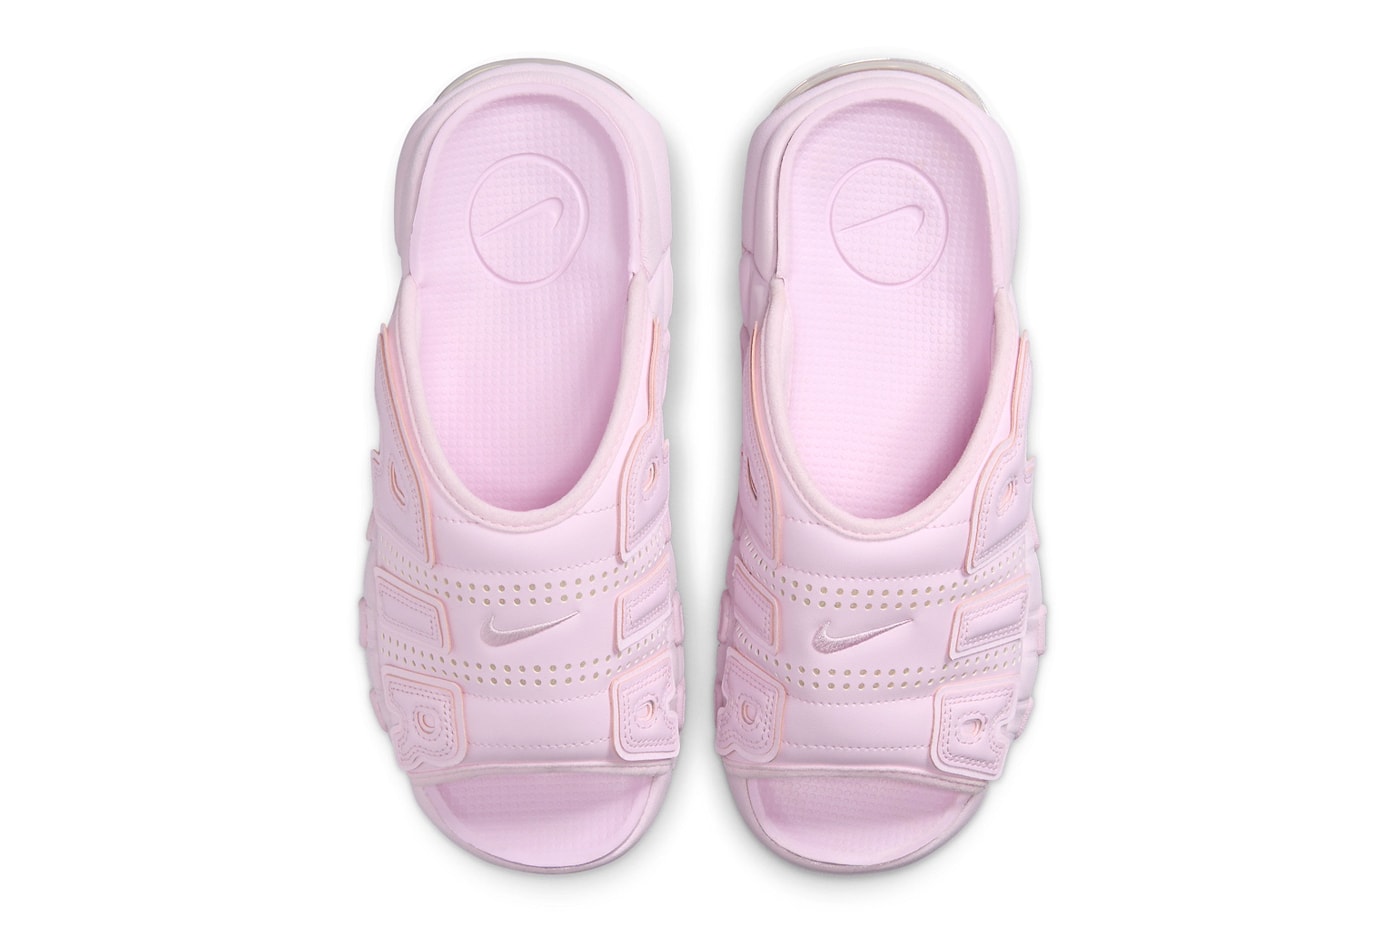 Nike Air More Uptempo Slide Arrives in "Pink" FJ2597-600 sandals ambushretro mx calm slides 